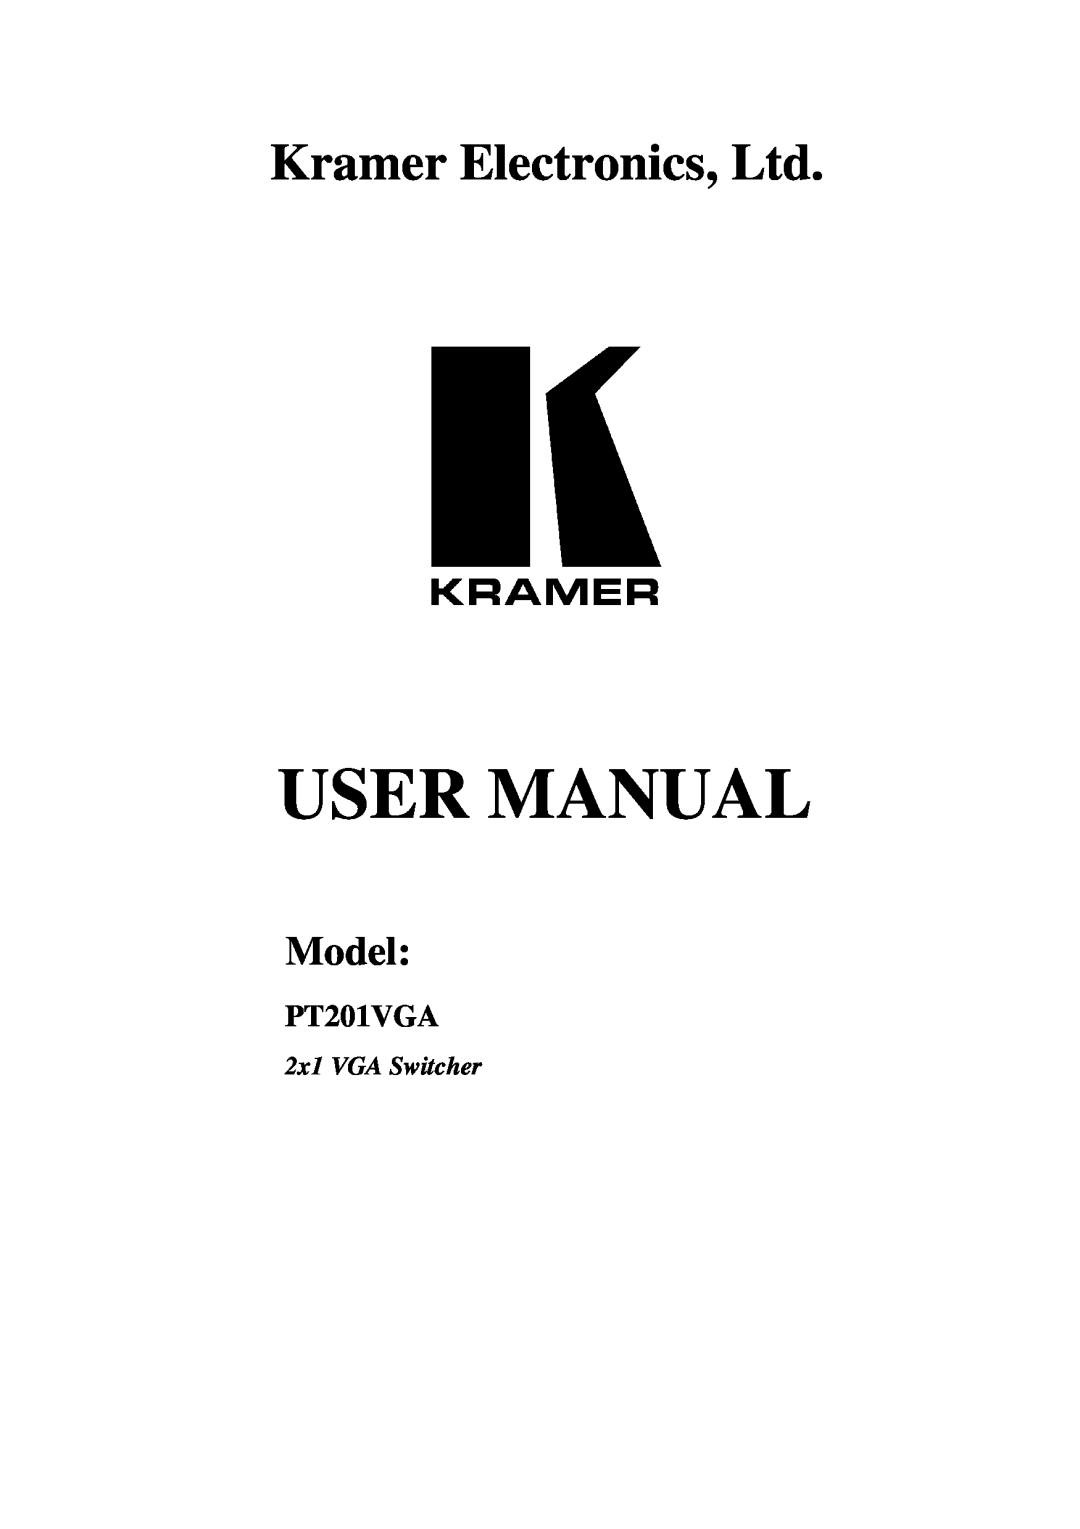 Kramer Electronics PT201VGA user manual Model, 2x1 VGA Switcher 